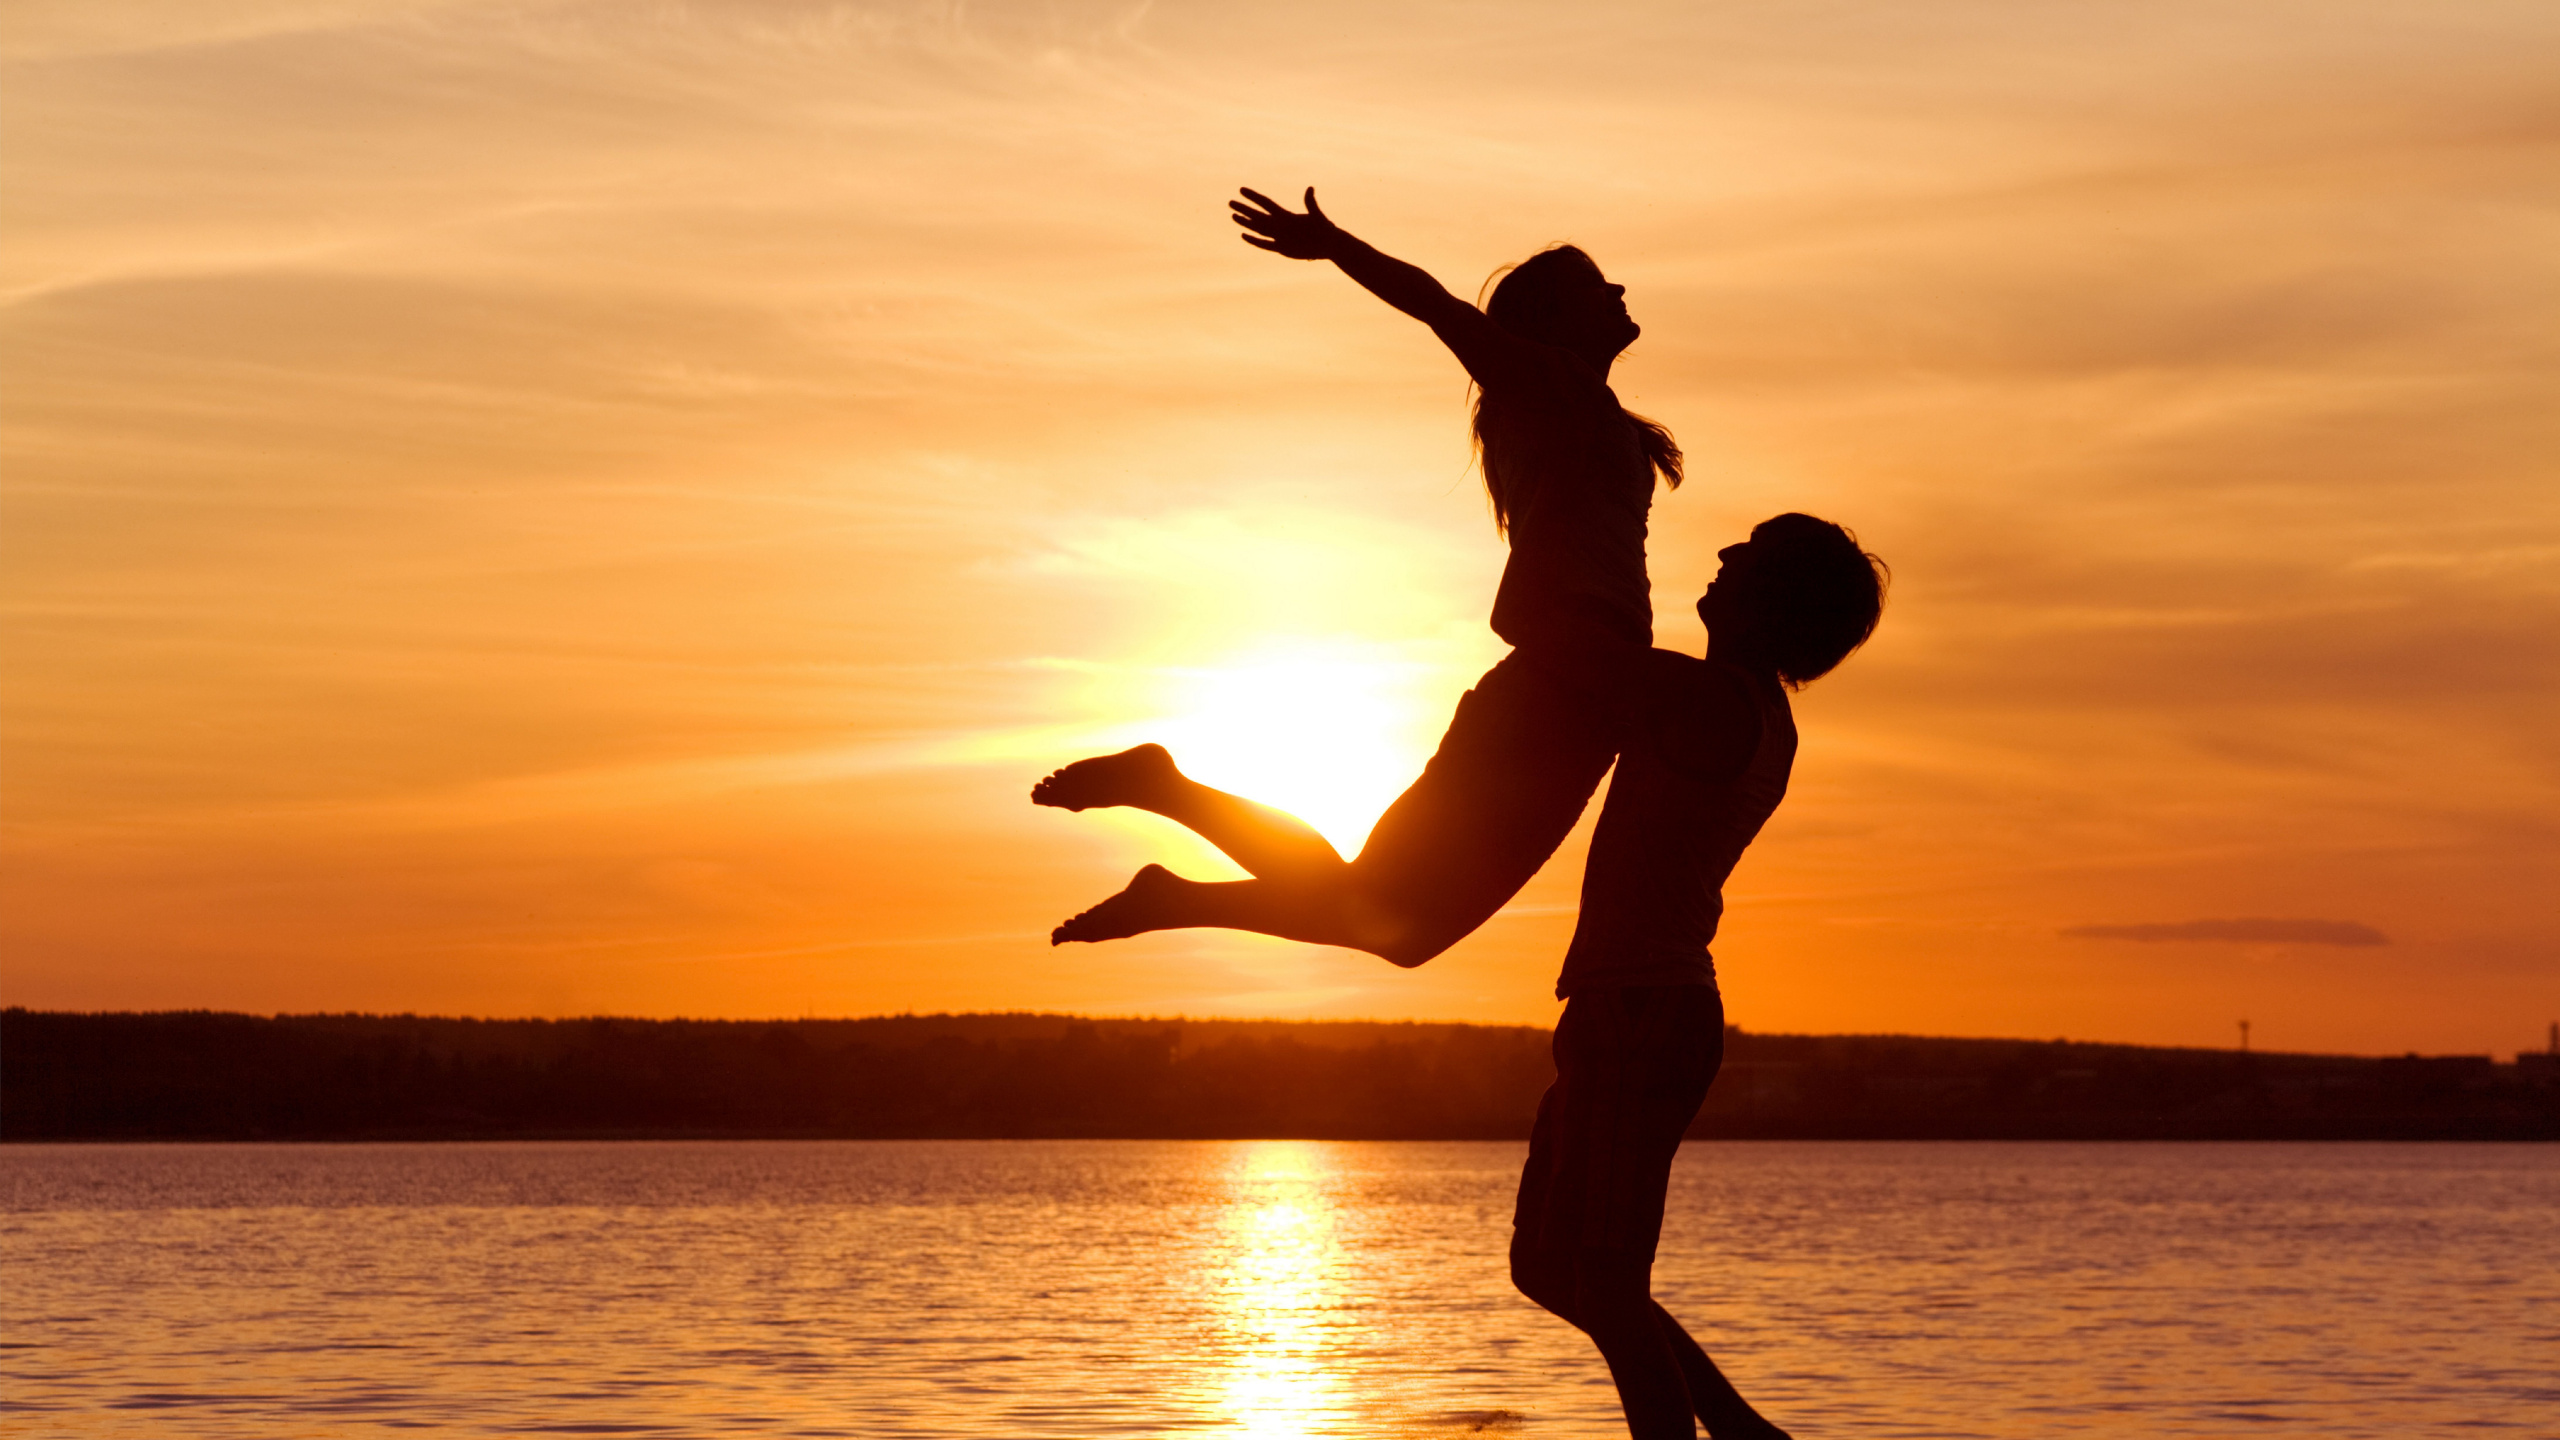 Romance, Water, Sunset, Fun, Jumping. Wallpaper in 2560x1440 Resolution